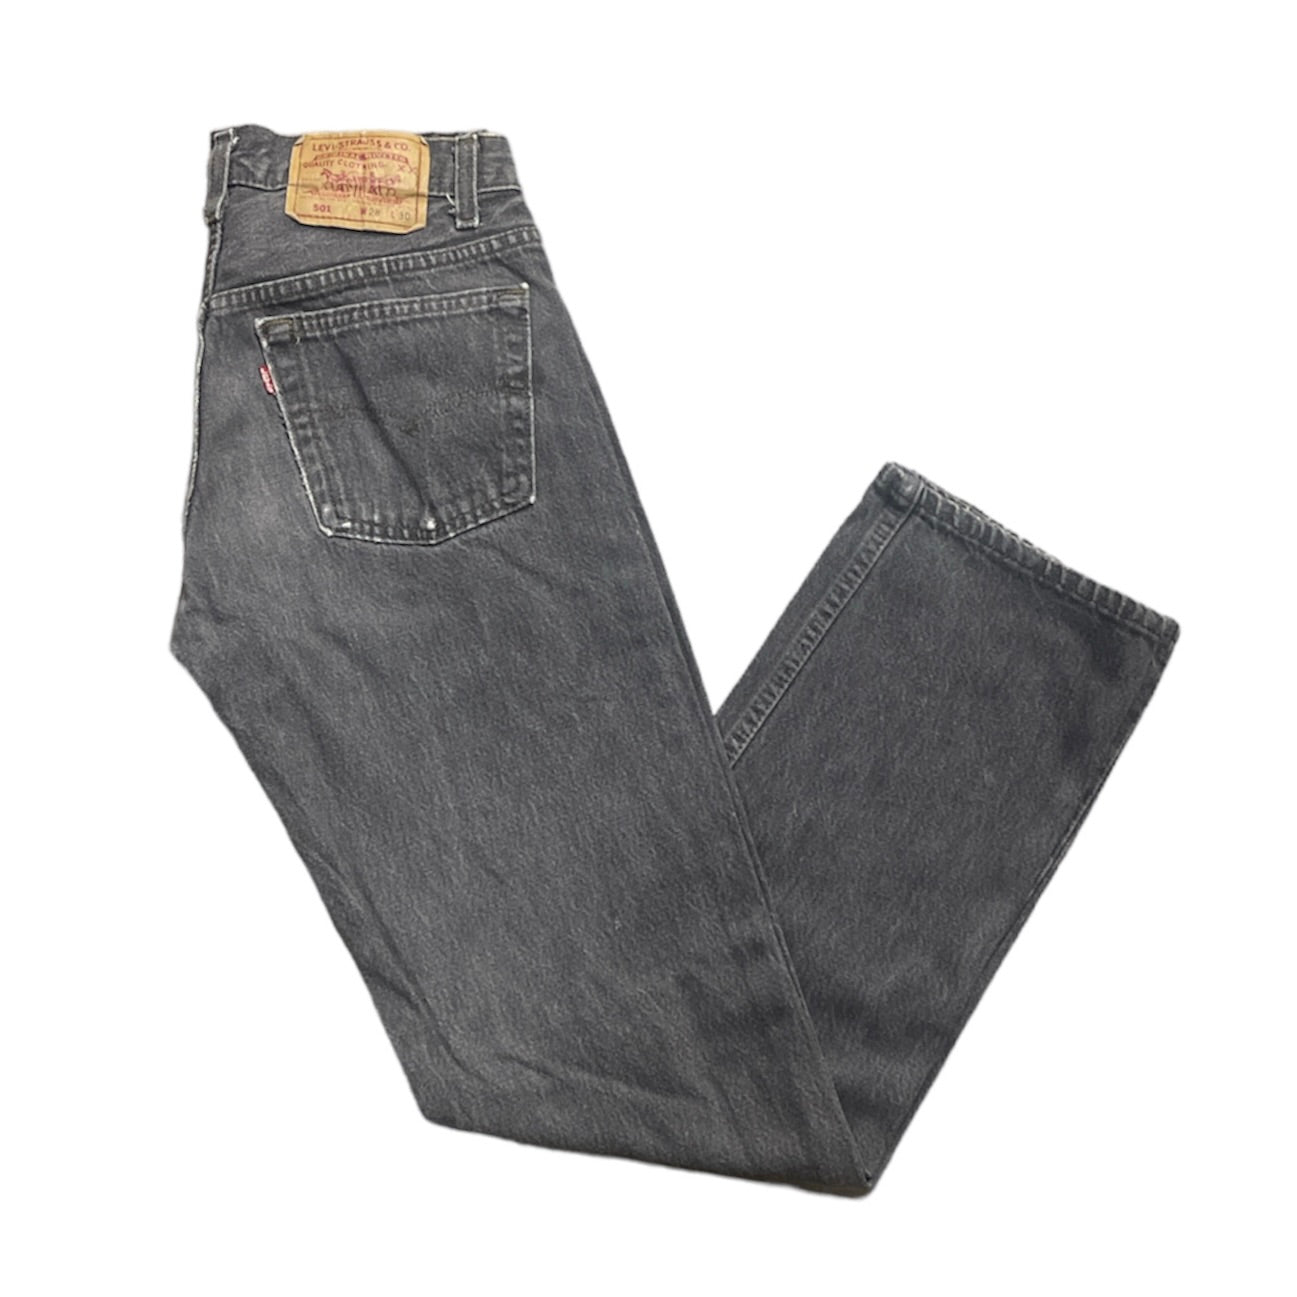 Vintage Levis 501 Vintage Grey Jeans (W28/L30)